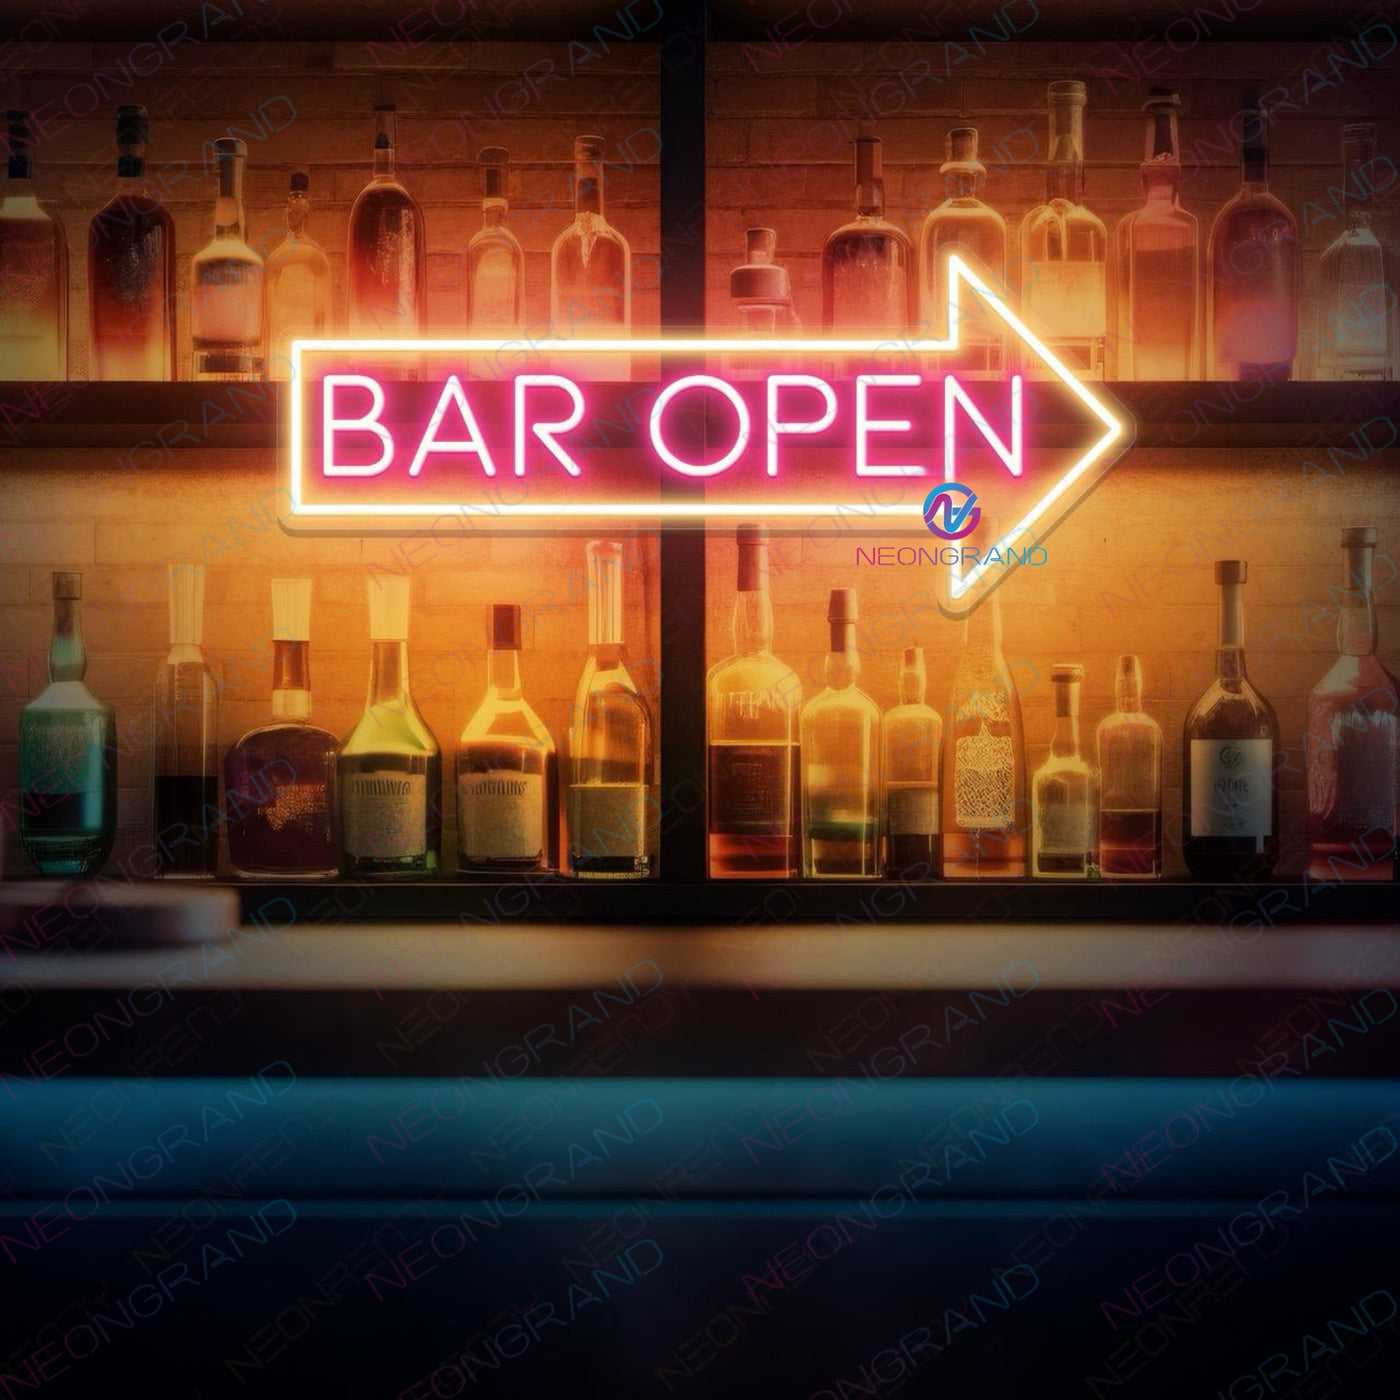 Bar Open Arrow Neon Sign Led Light